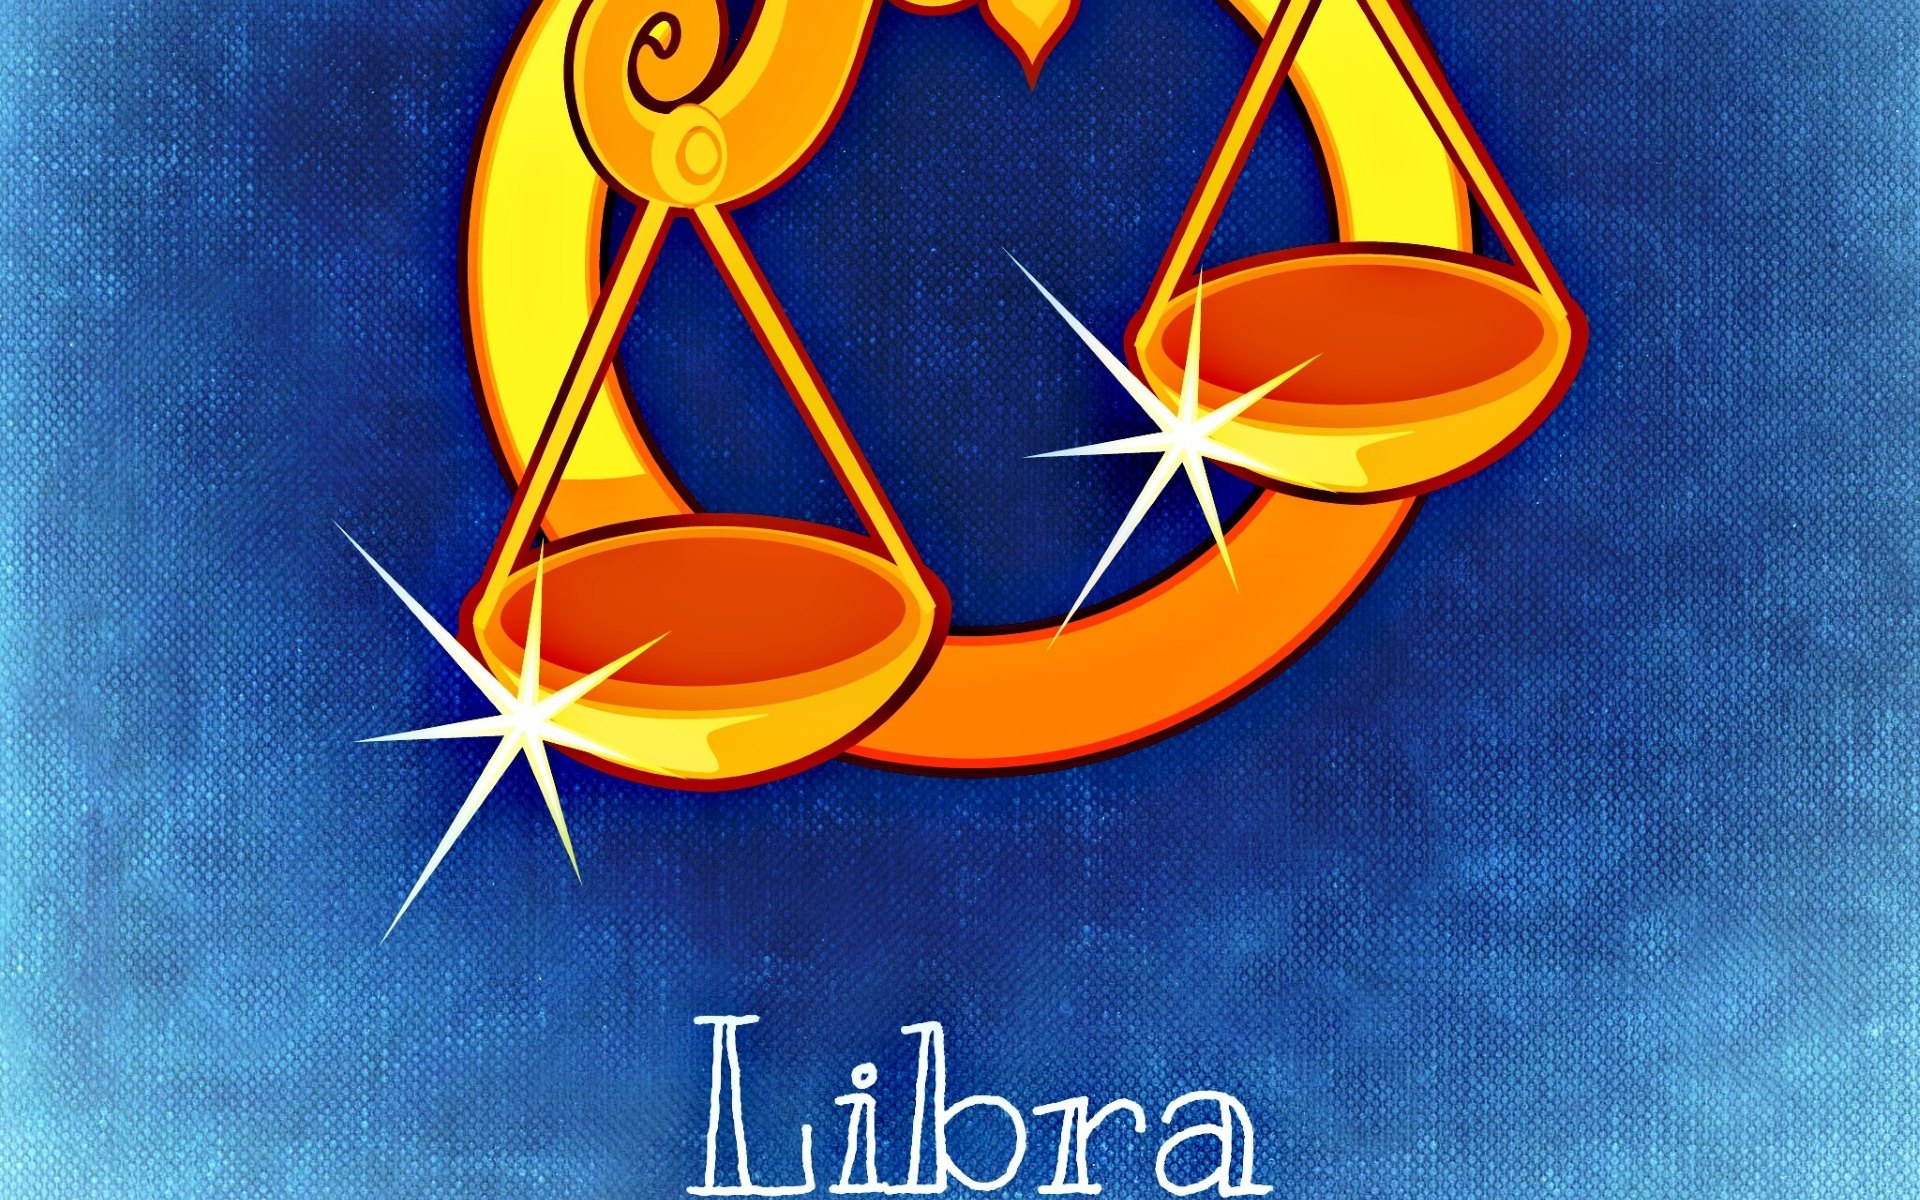 Horoscope - Libra by Alexas_Fotos